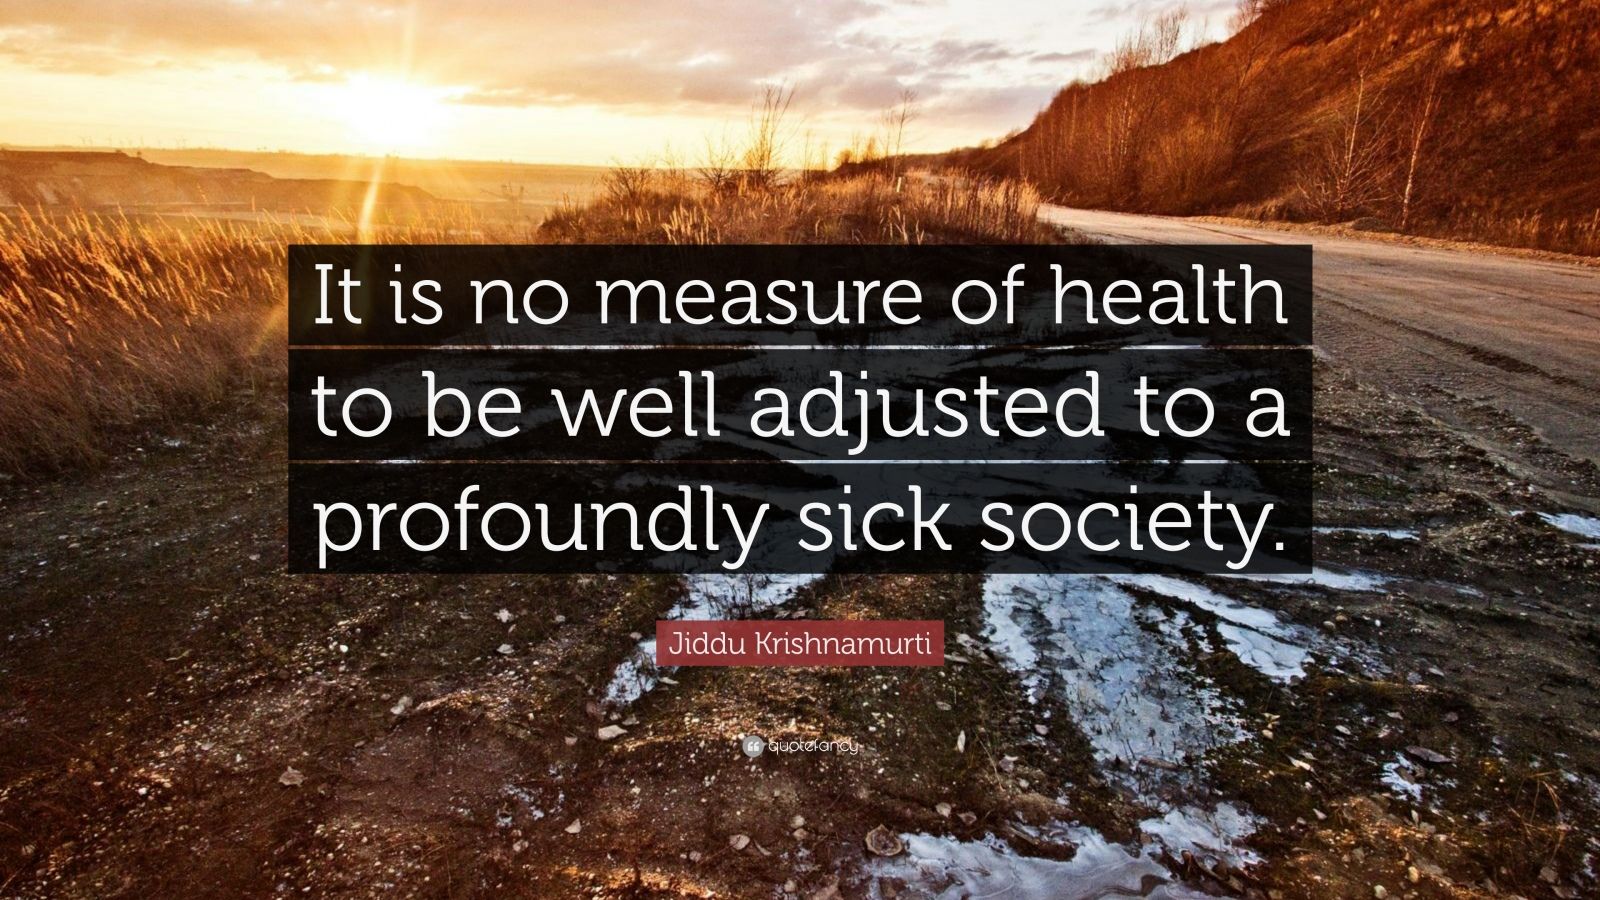 Jiddu Krishnamurti Quote: “It is no measure of health to be well